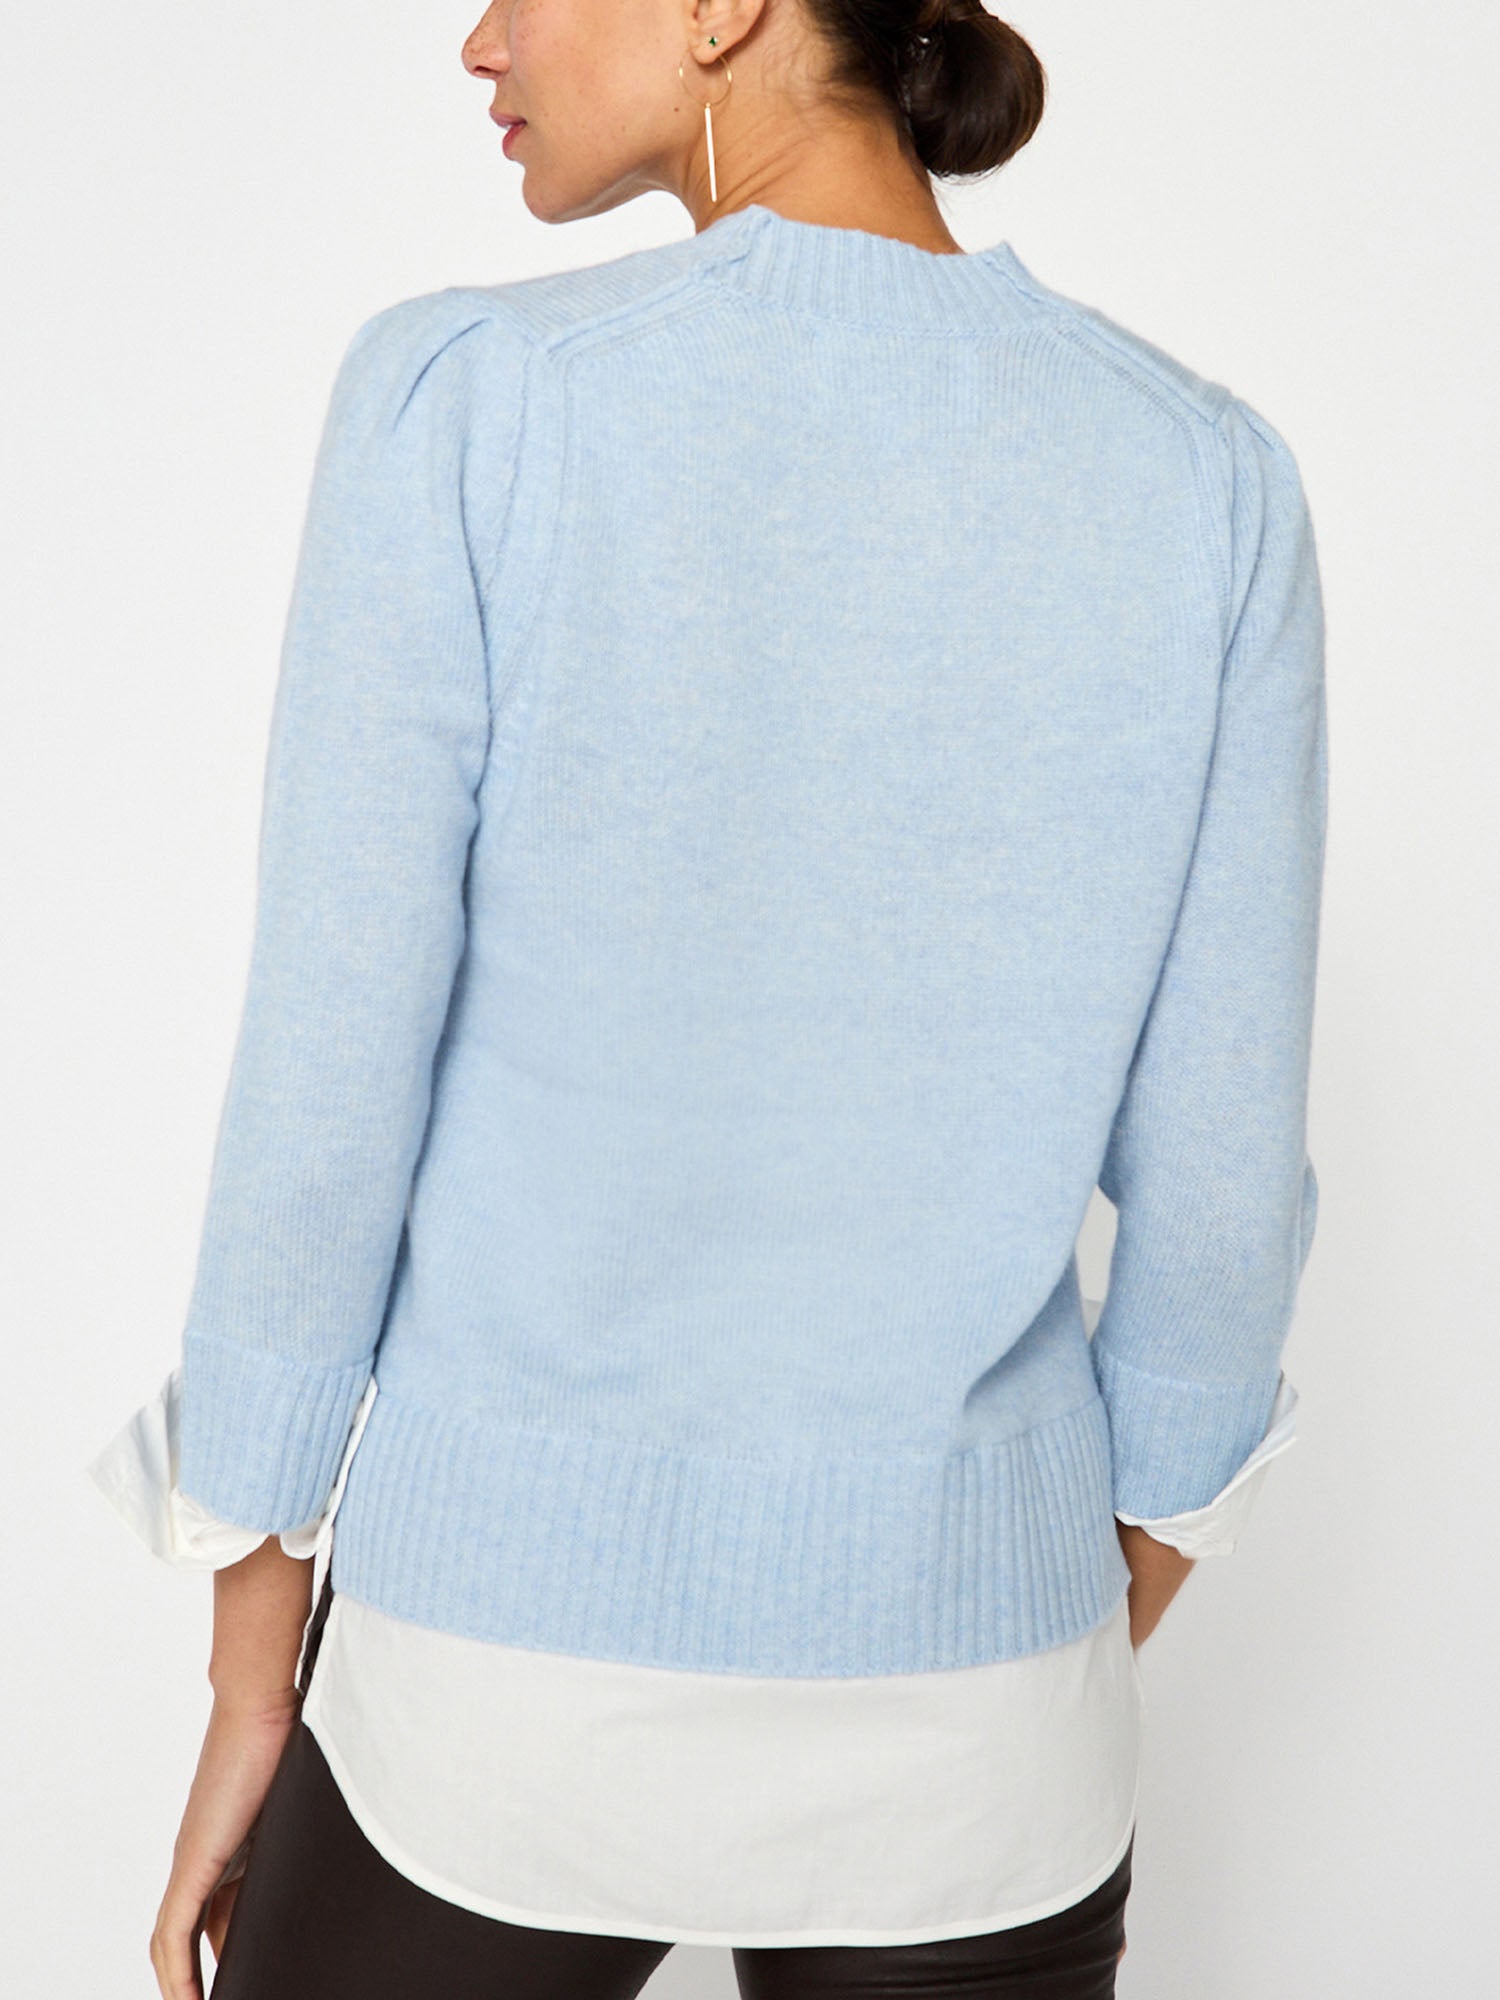 Eton light blue layered crewneck sweater back view